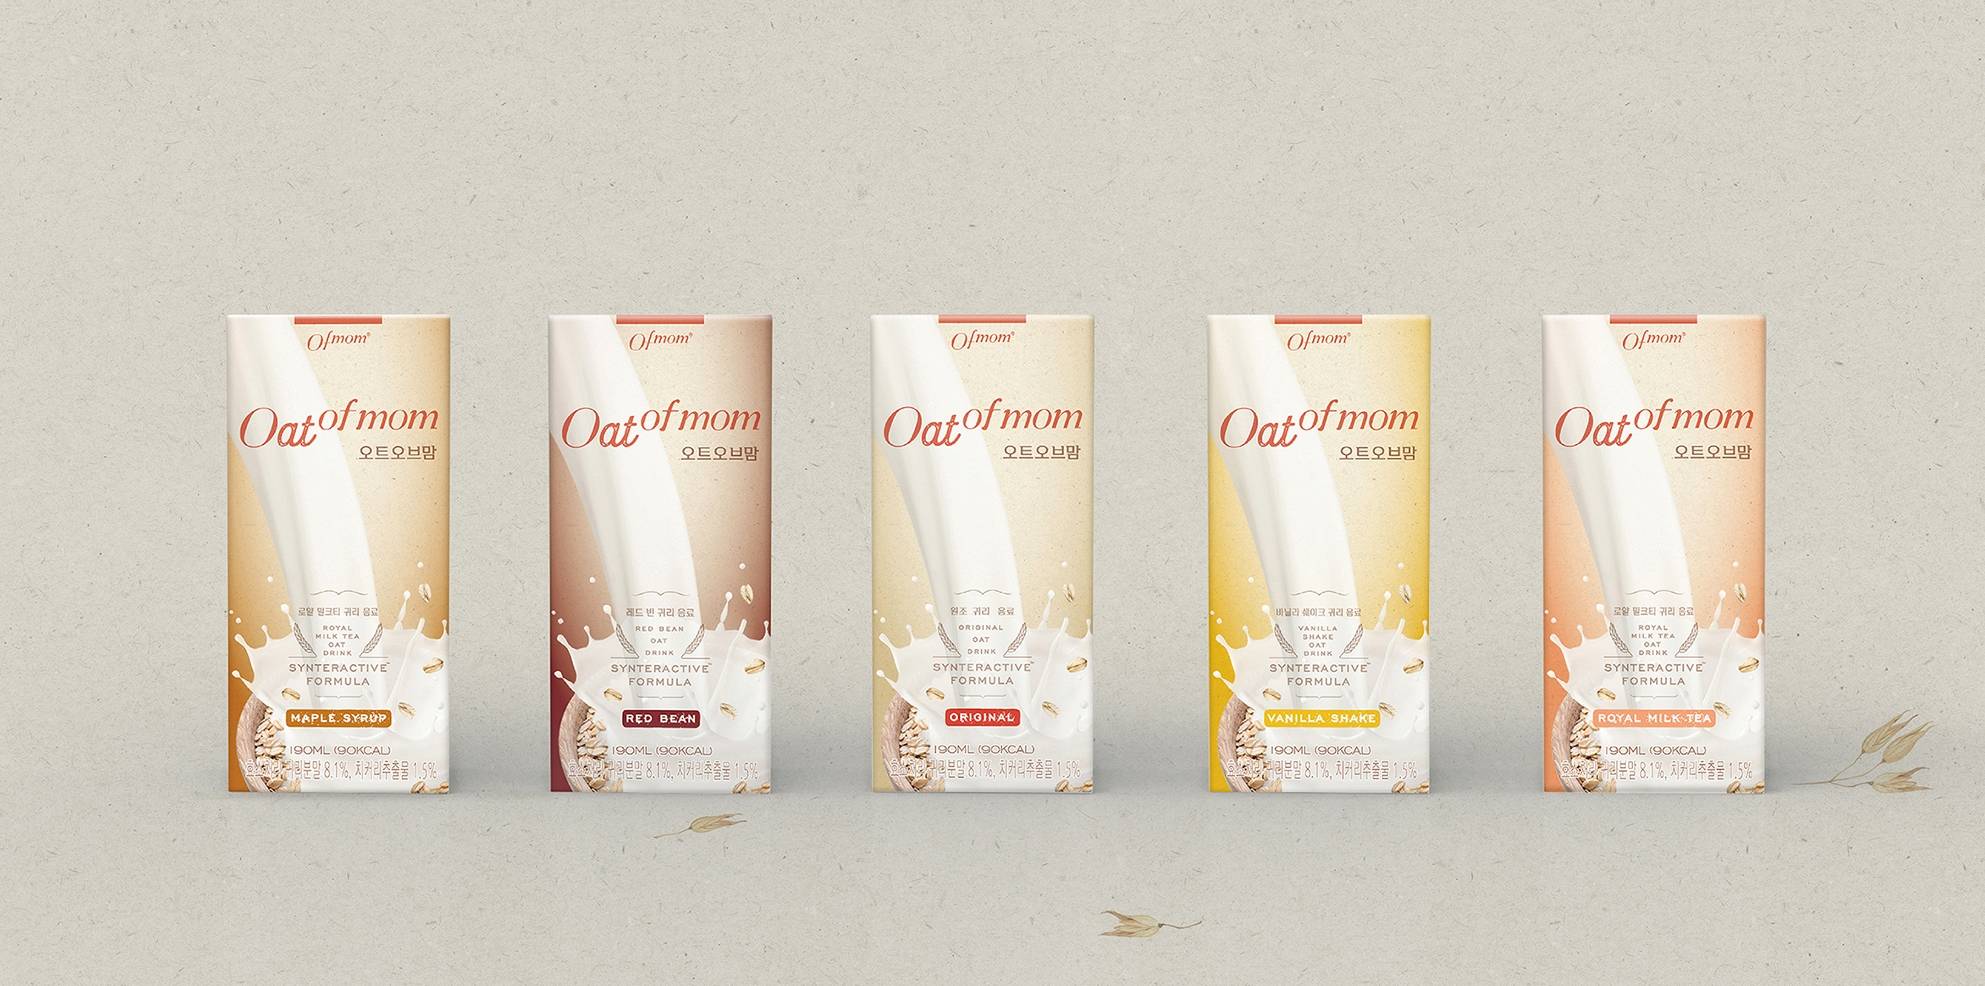 oatofmom燕麦牛奶包装设计荣获红棉中国设计奖2021年度视觉传达奖